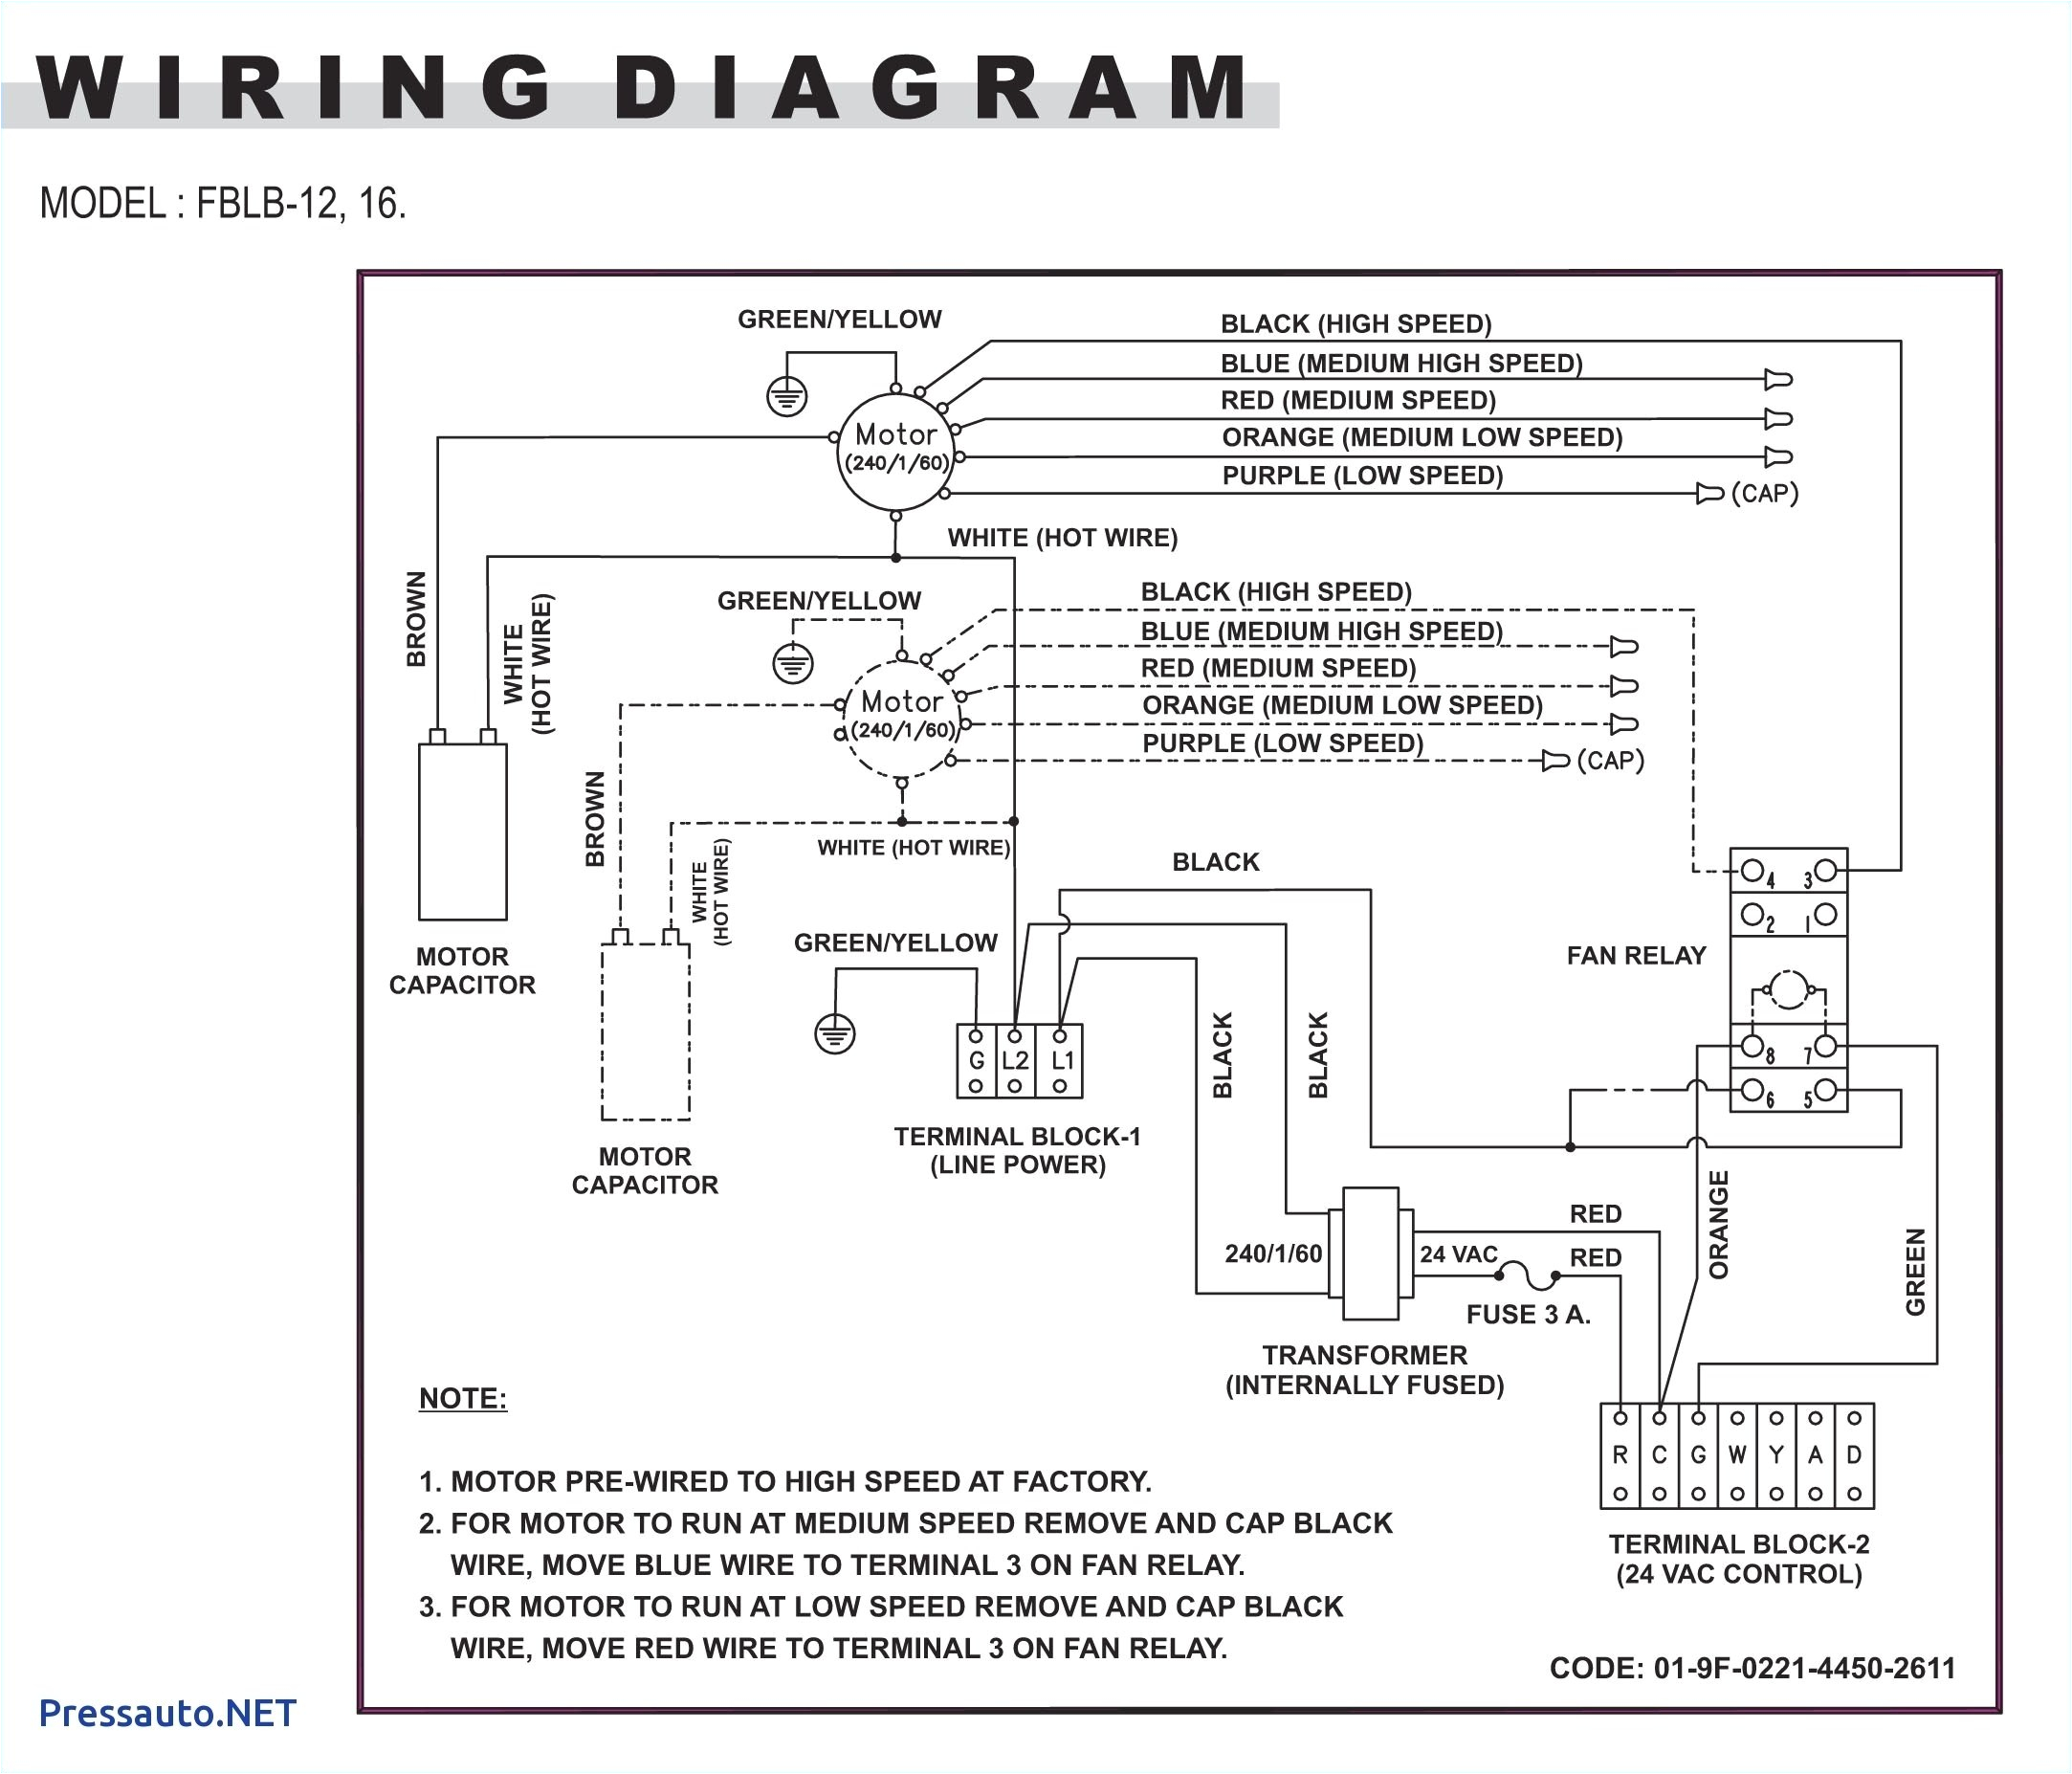 Baseboard Heater Wiring Diagram 240v Cadet Baseboard Heater Wiring Diagram Wiring Diagram